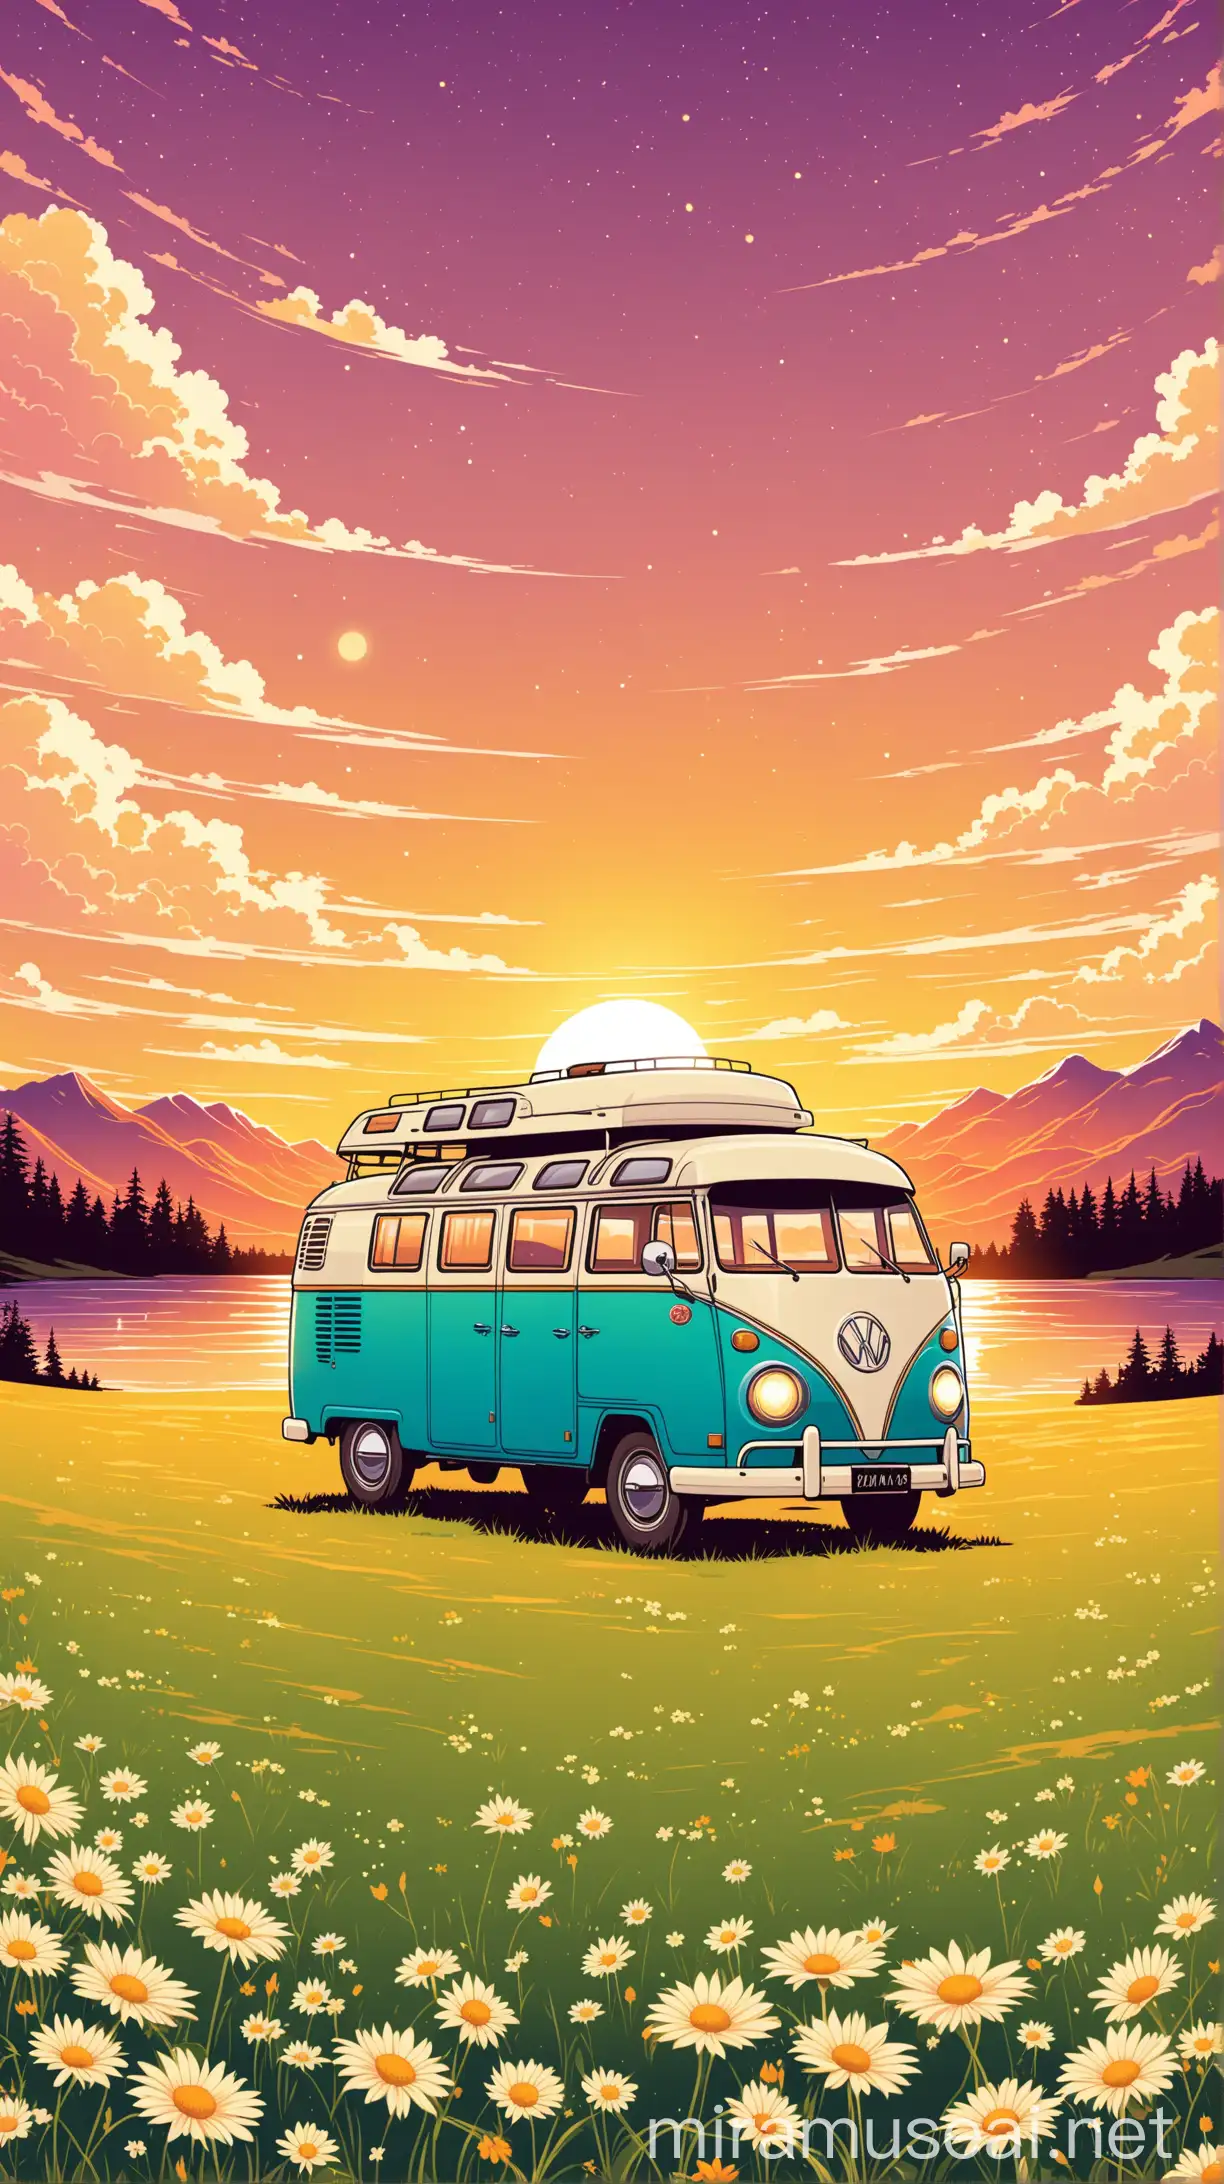 Vintage Camper Van Amidst Serene Nature with Sunset Sky Aesthetic Vector Art